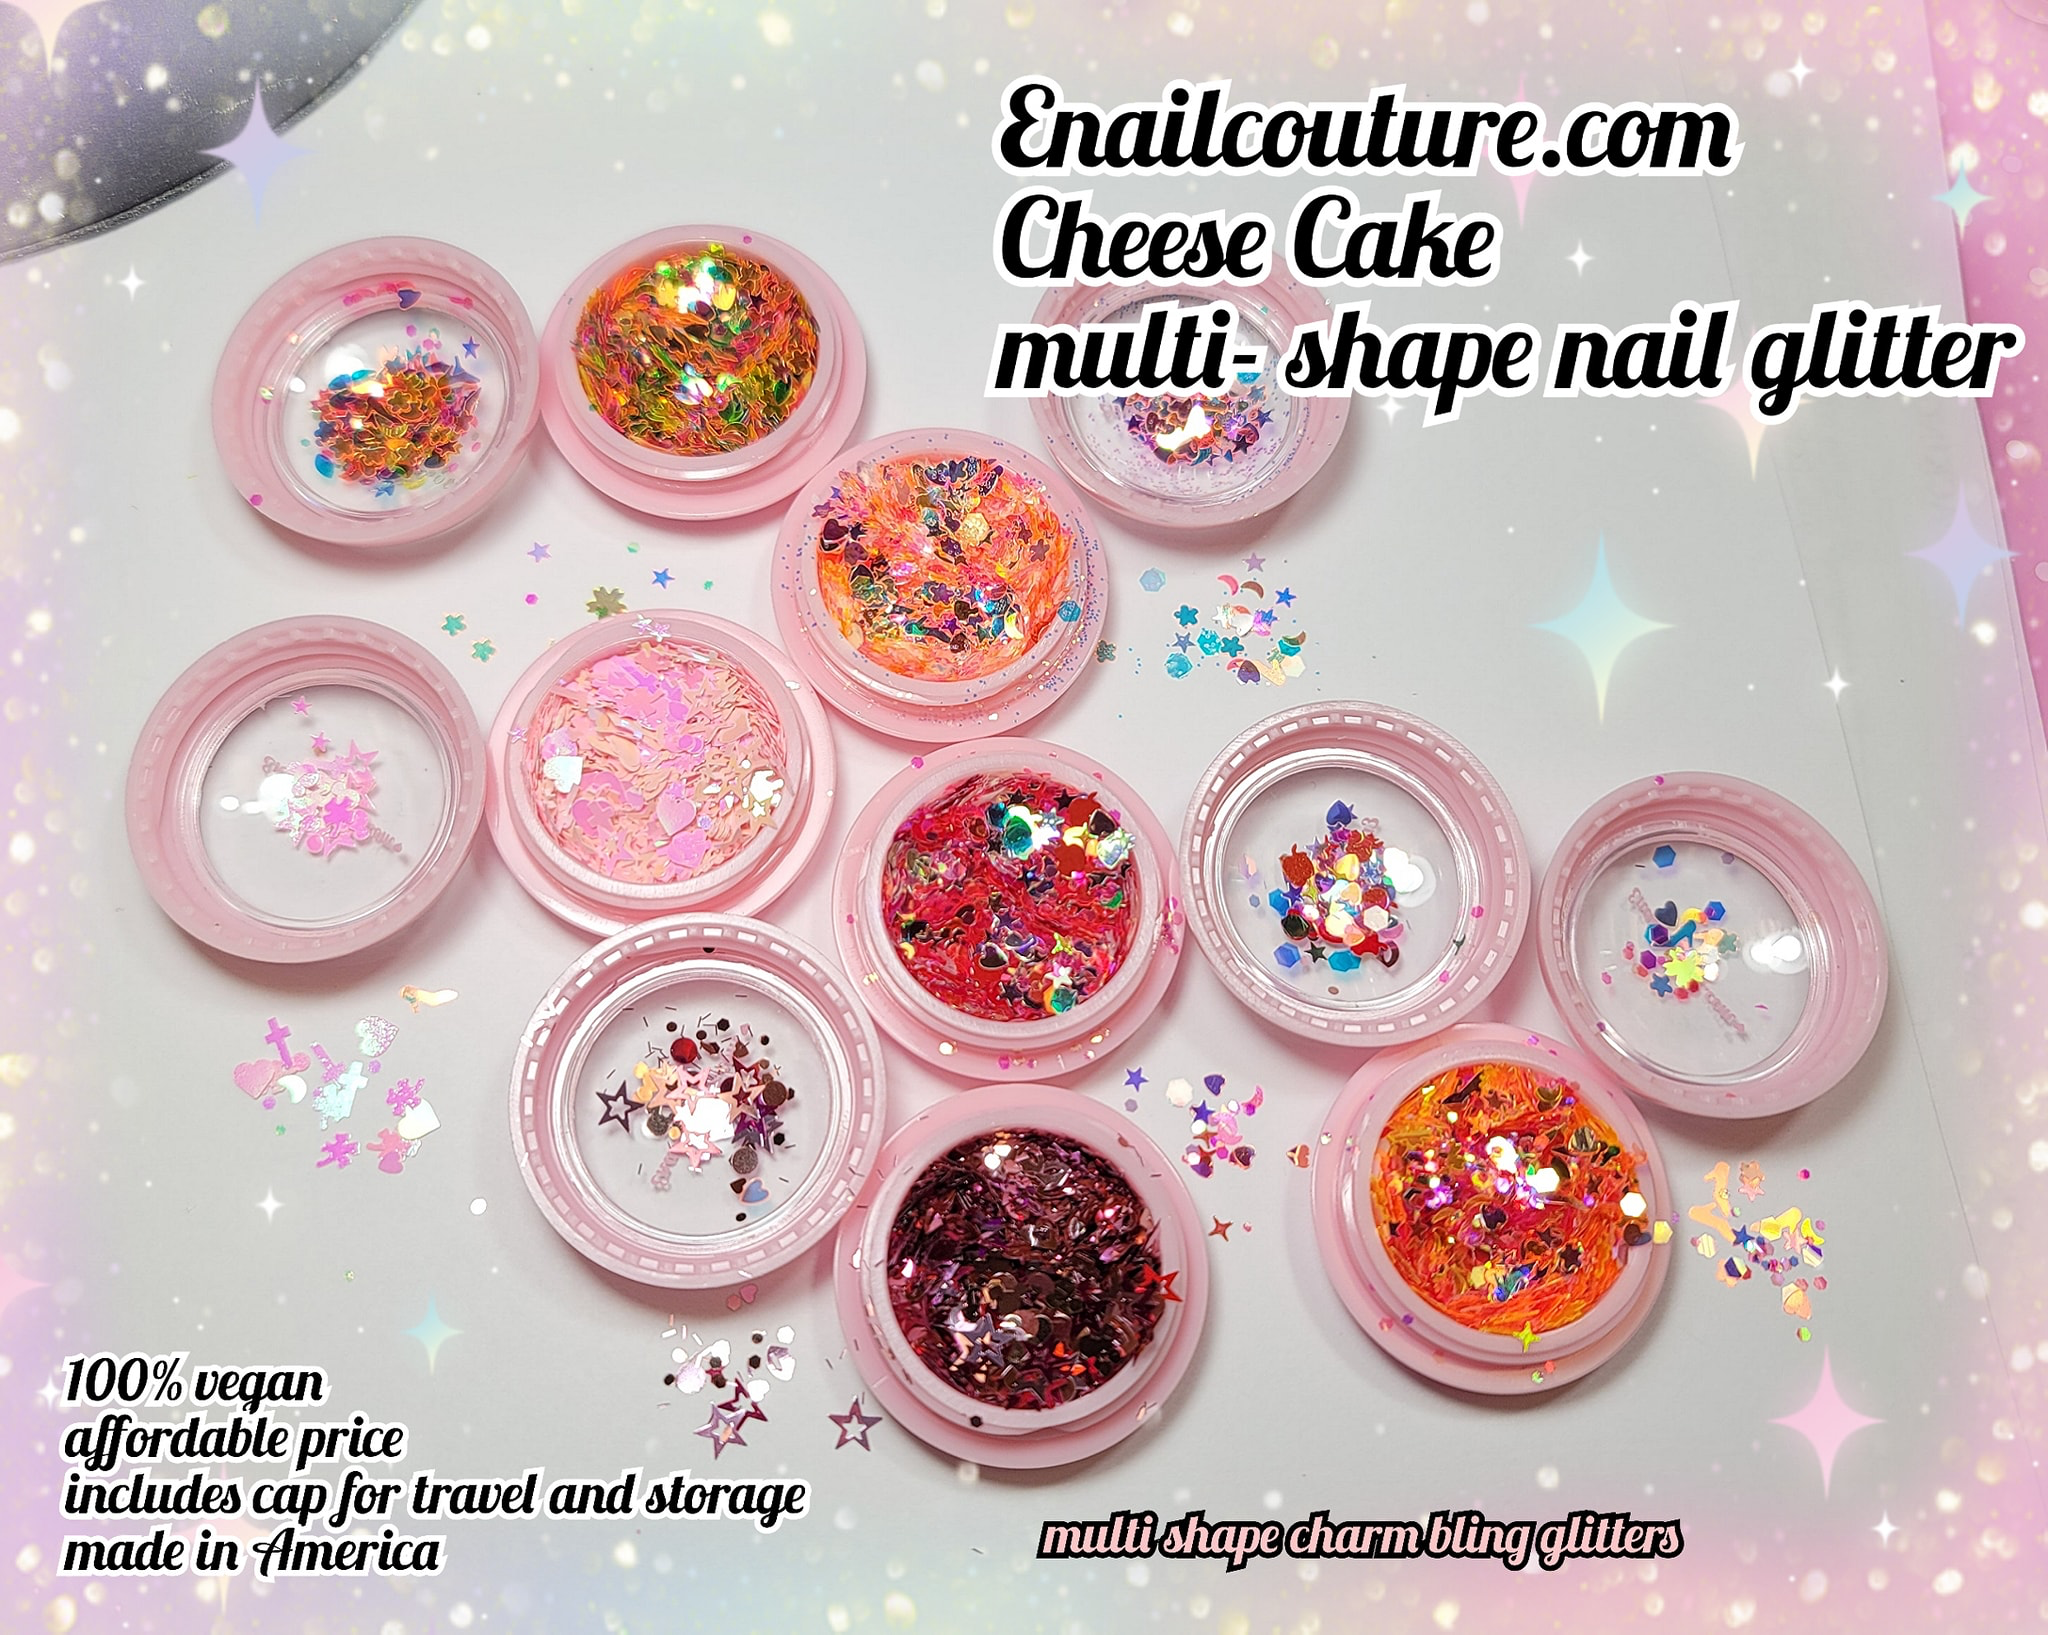 Tart glitter set (Set of 6 Holographic Nail Glitter Mermaid Powder Fla